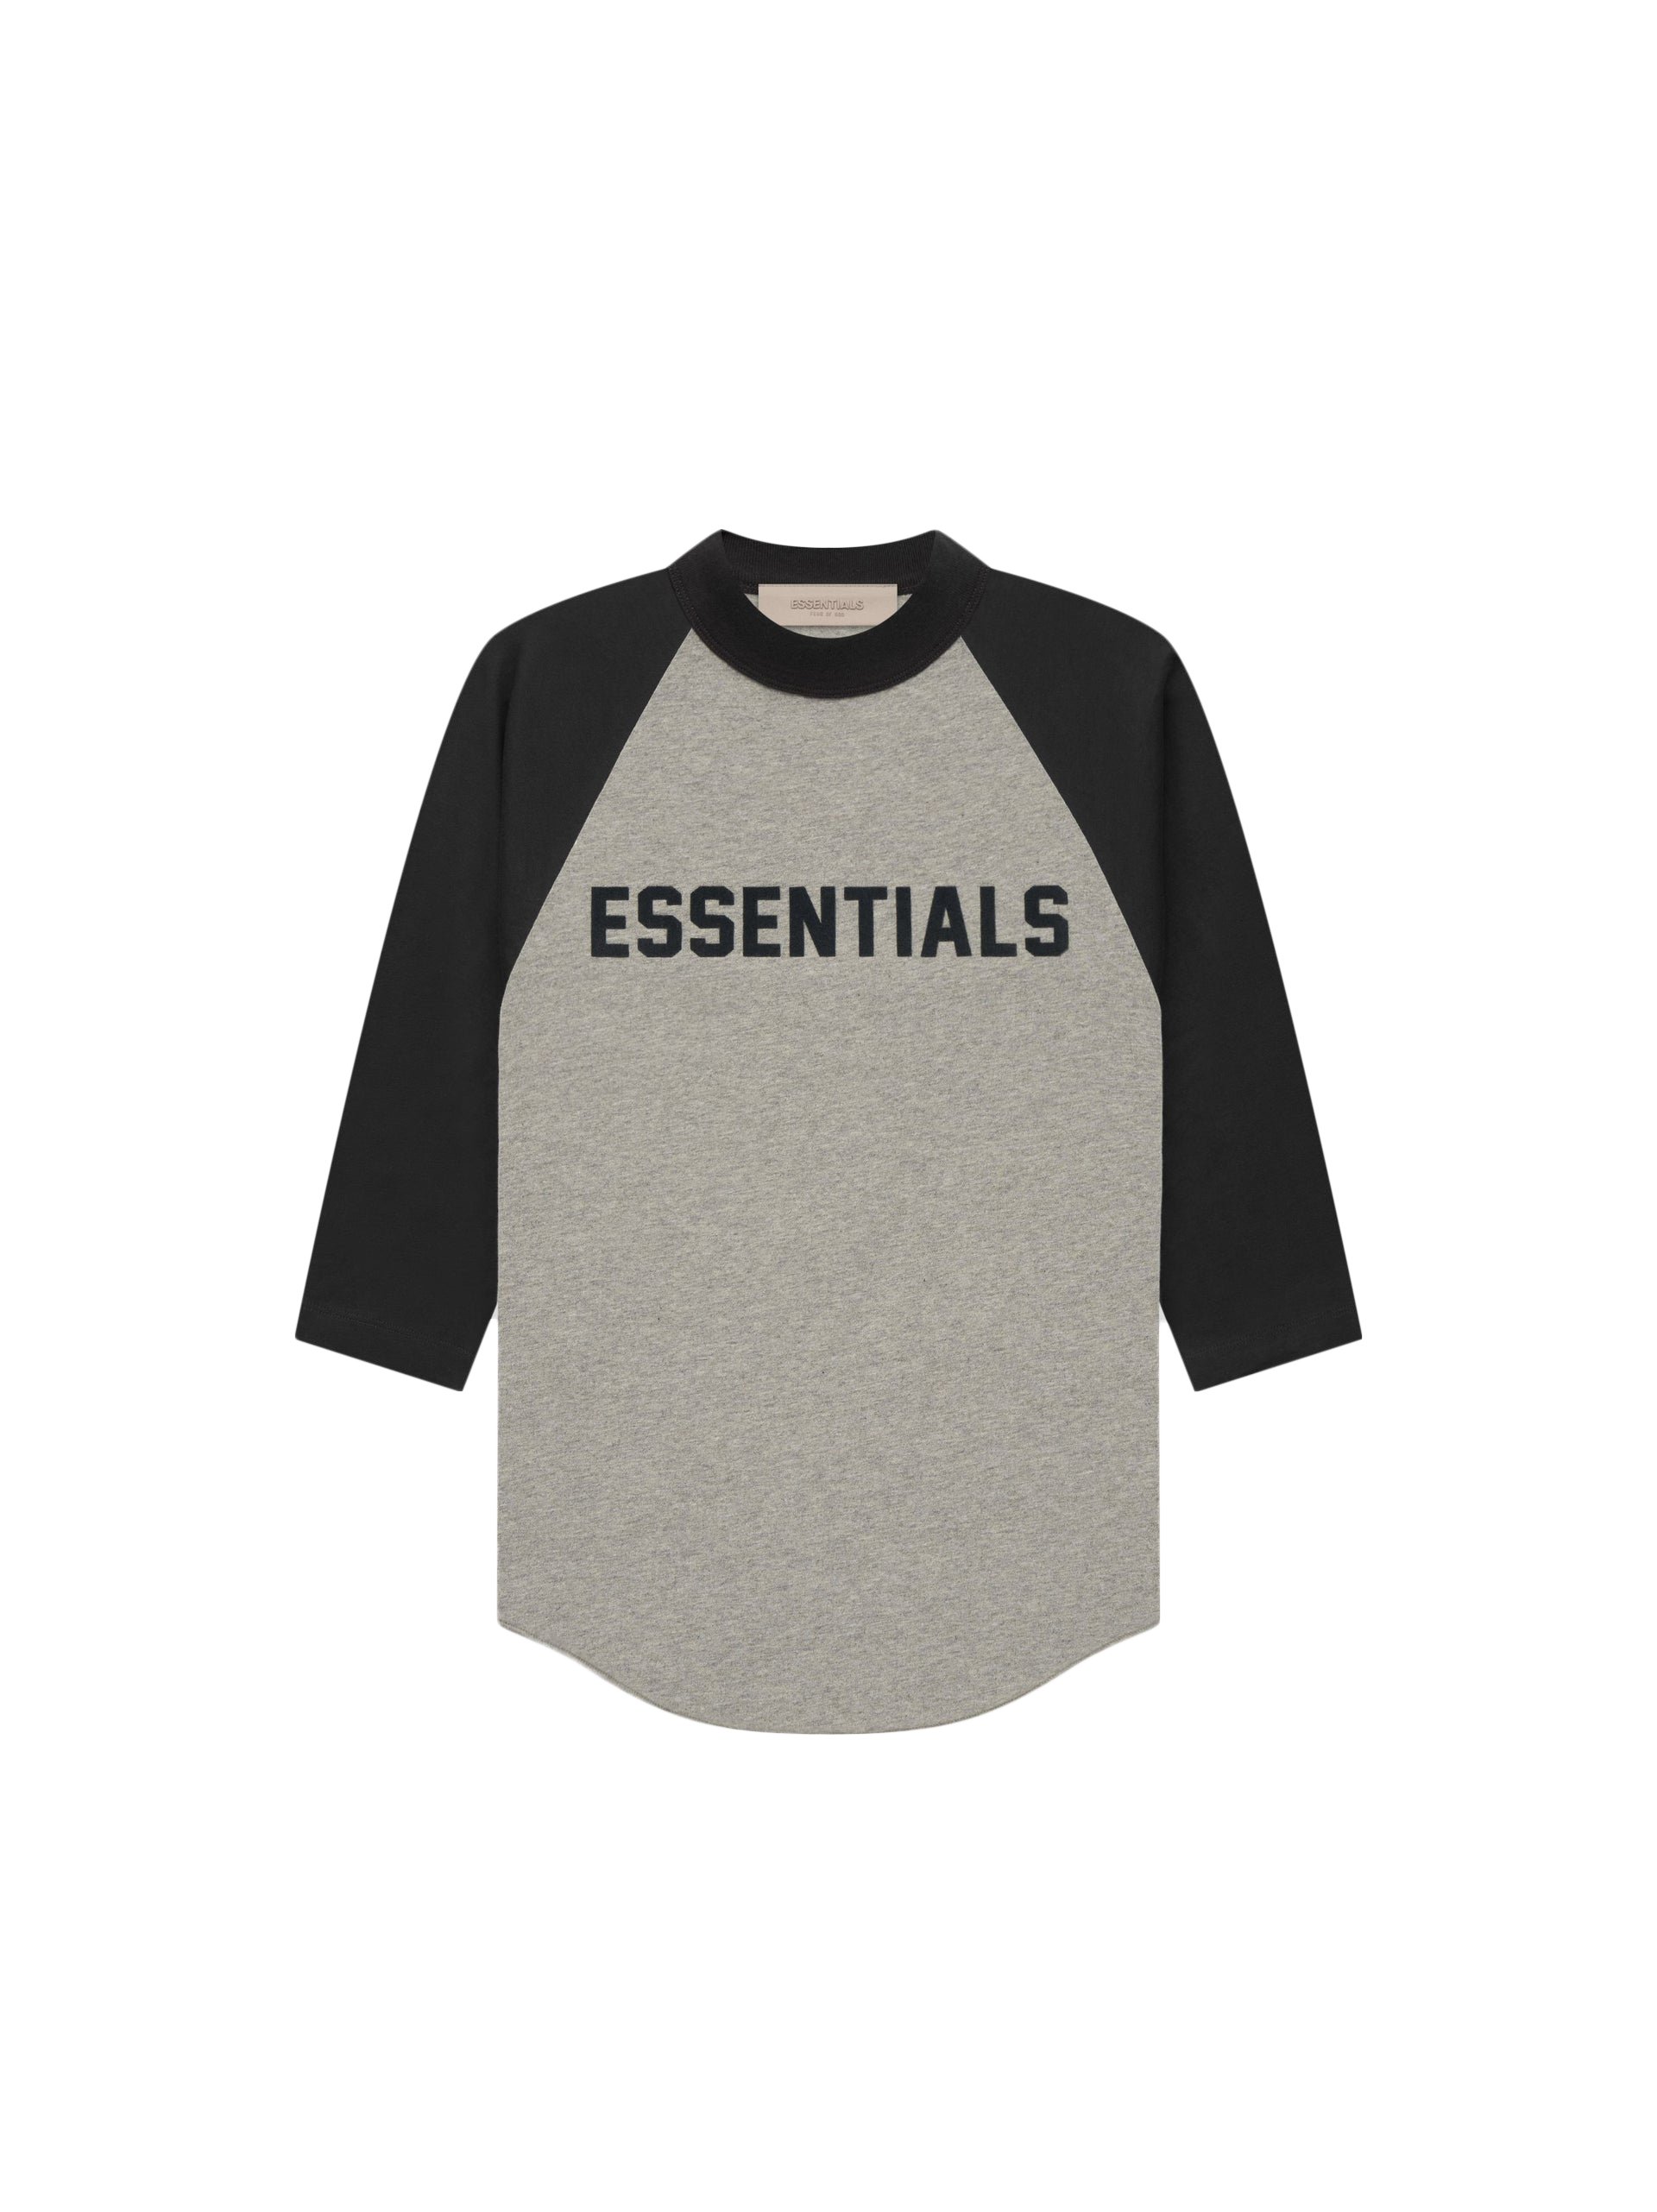 Fear of God Essentials Kids 3/4 Sleeve Baseball T-shirt Wheat Kids